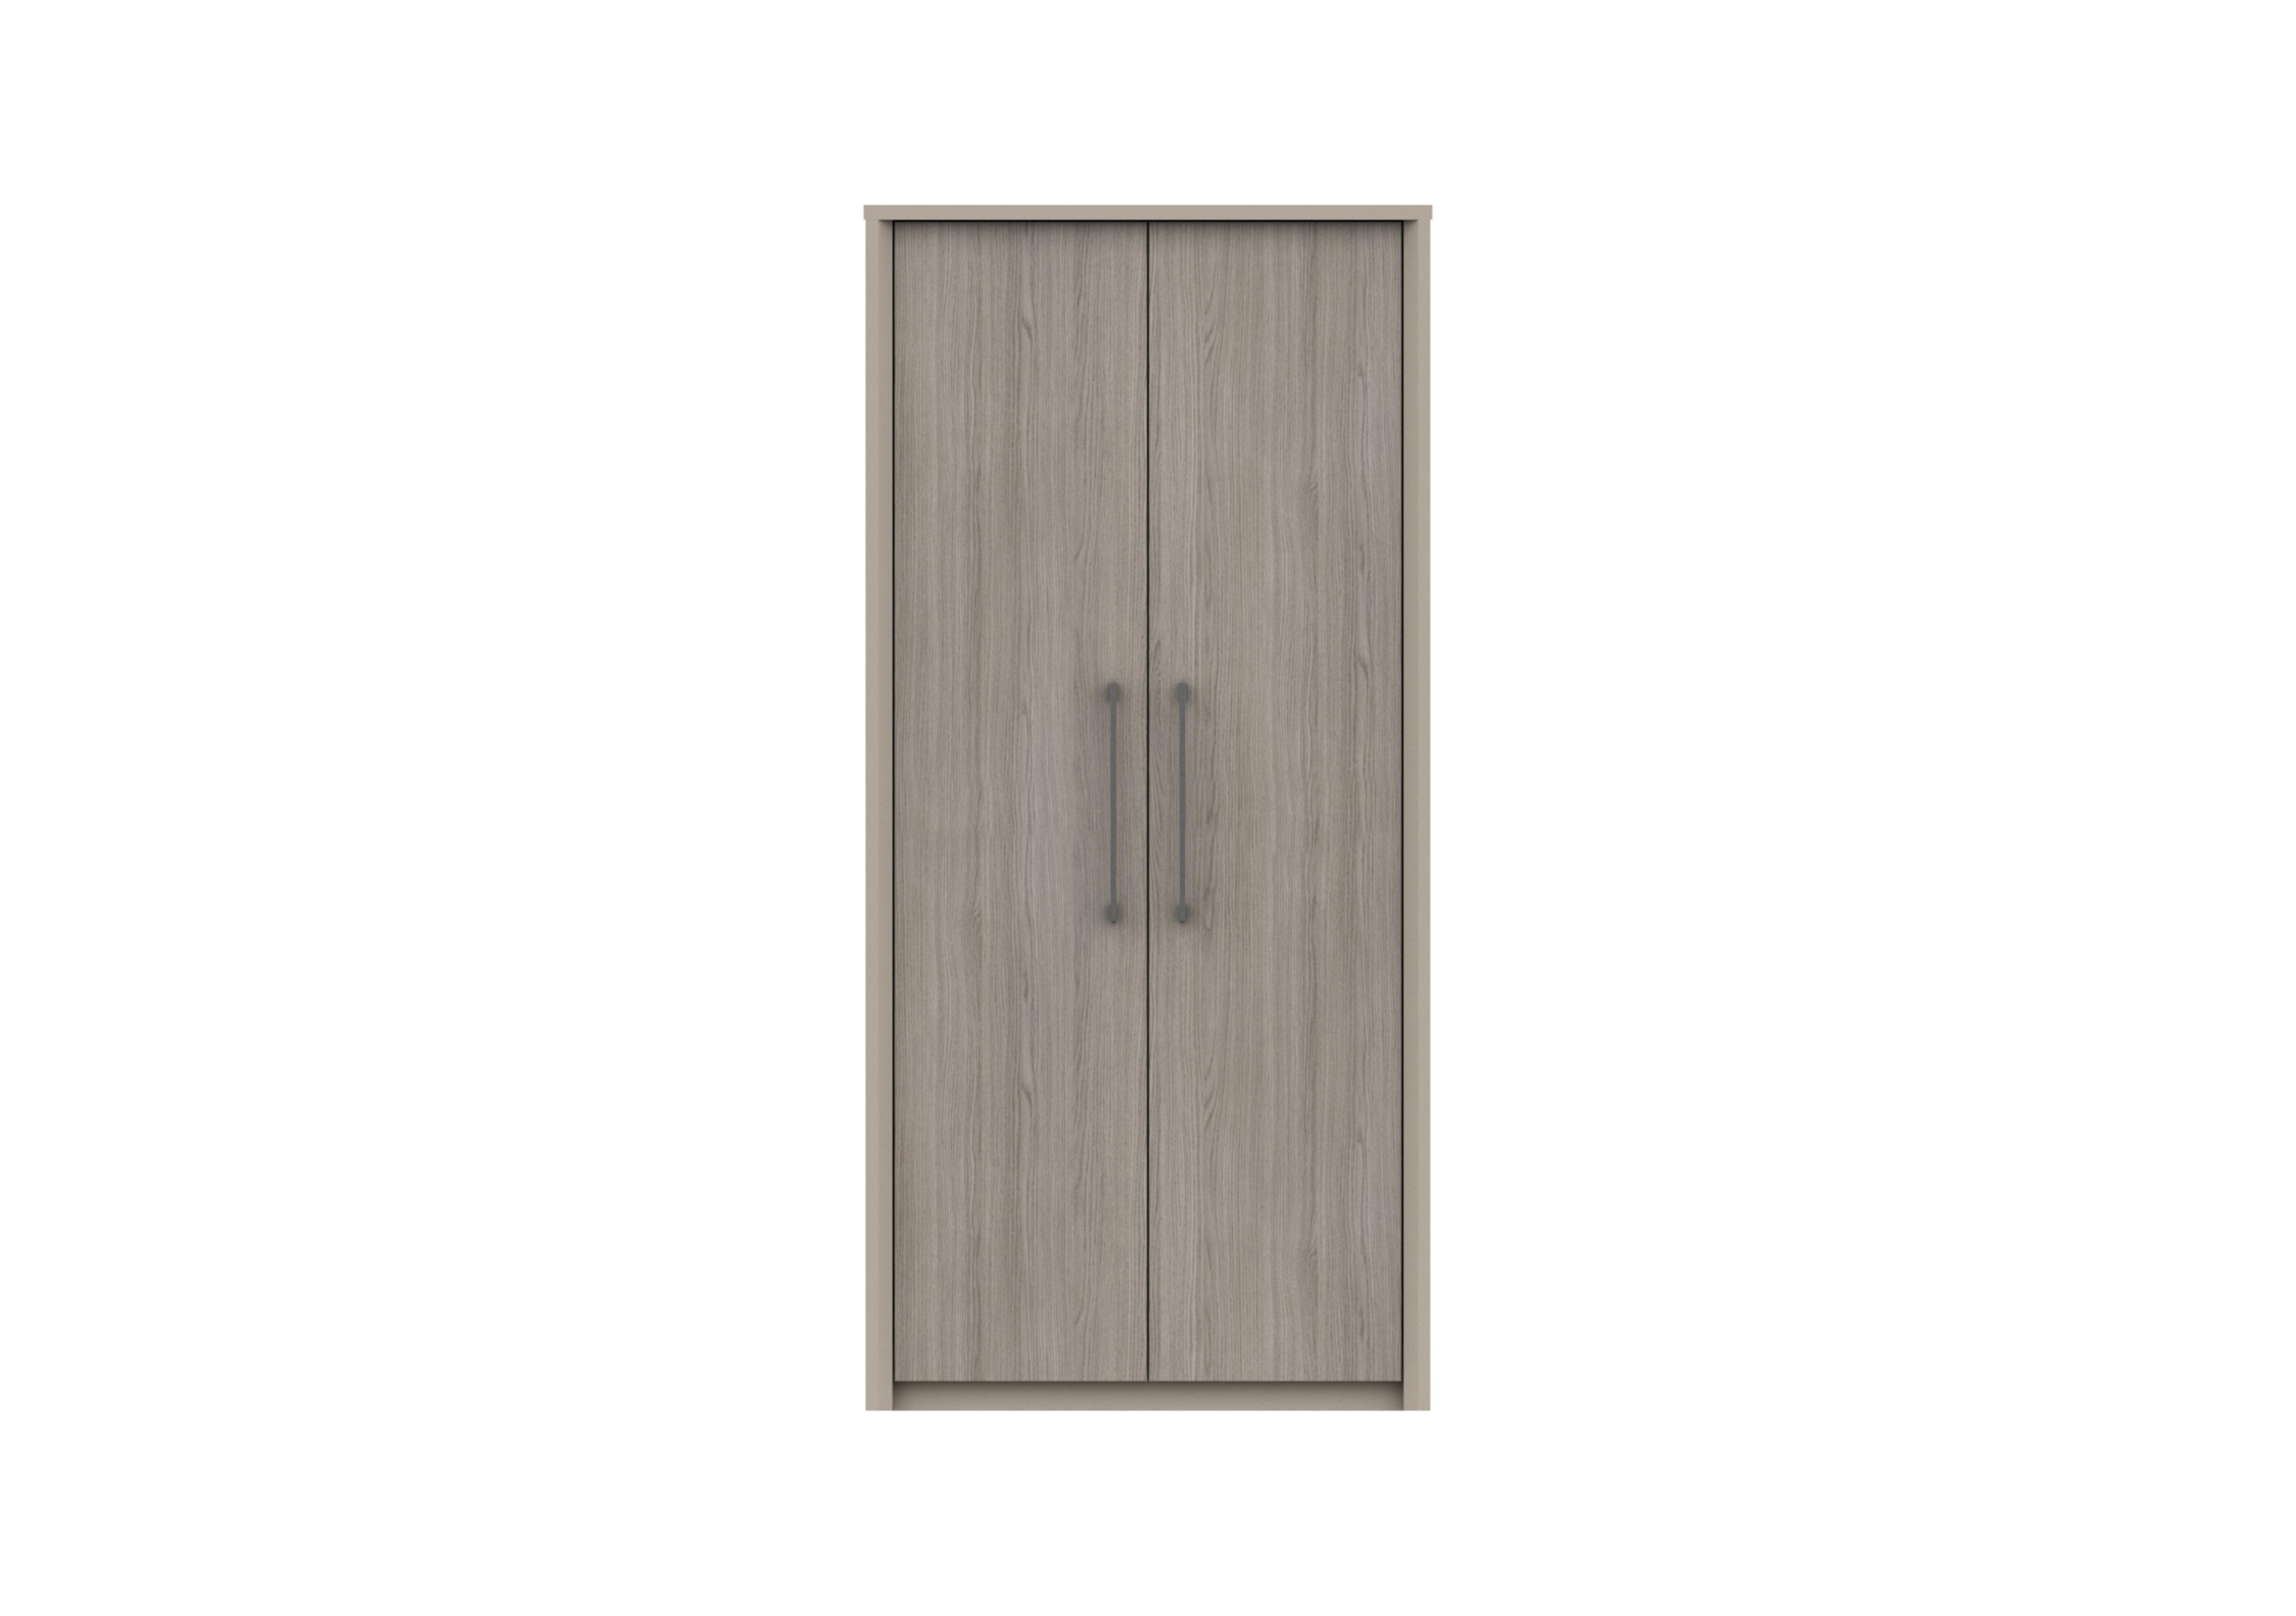 Paddington 2 Door Wardrobe in Fired Earth/Grey Oak on Furniture Village